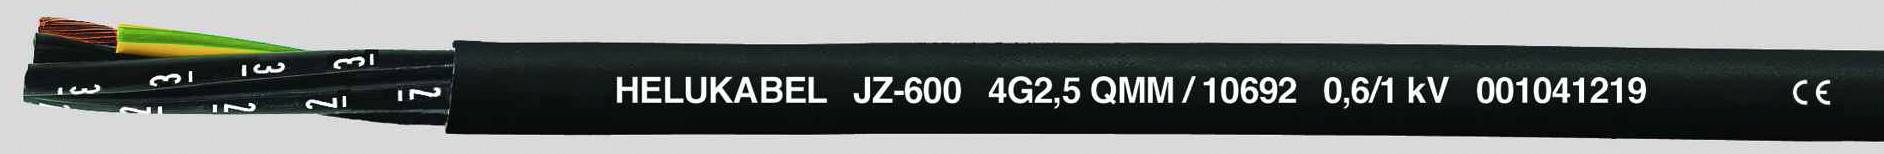 HELUKABEL JZ-600 Steuerleitung 12 G 0.75 mm² Schwarz 10597-1000 1000 m